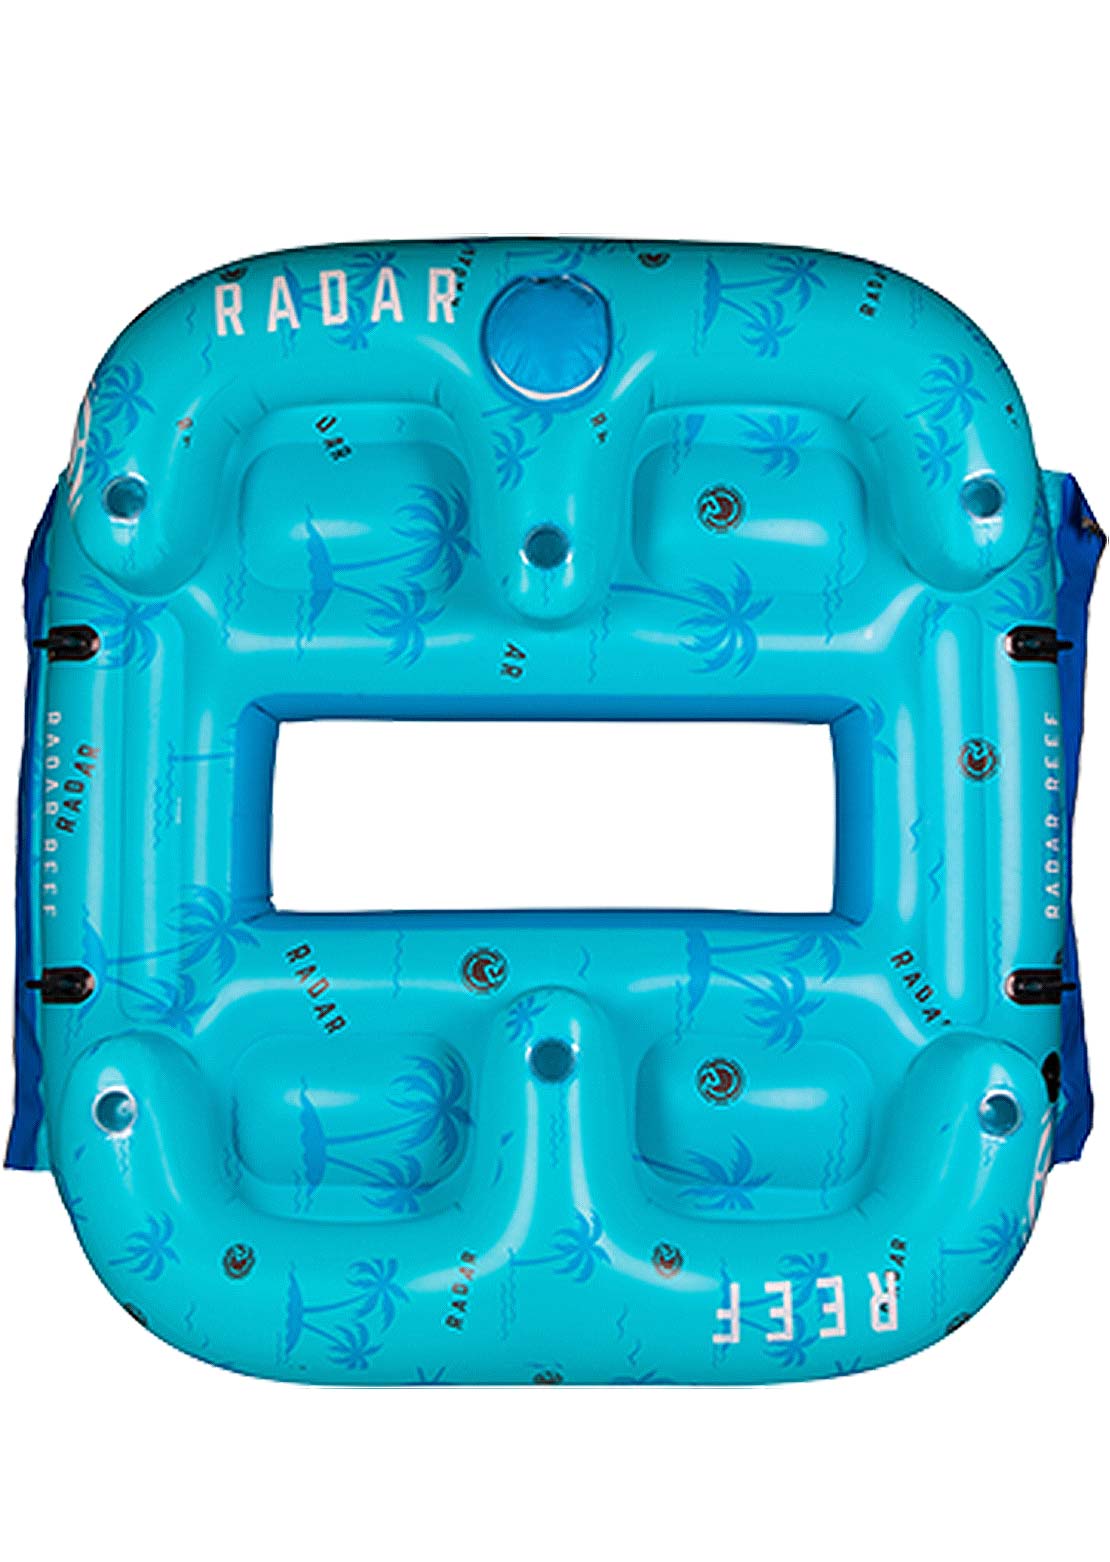 Radar Reef Lounge Inflatable Blue Palms